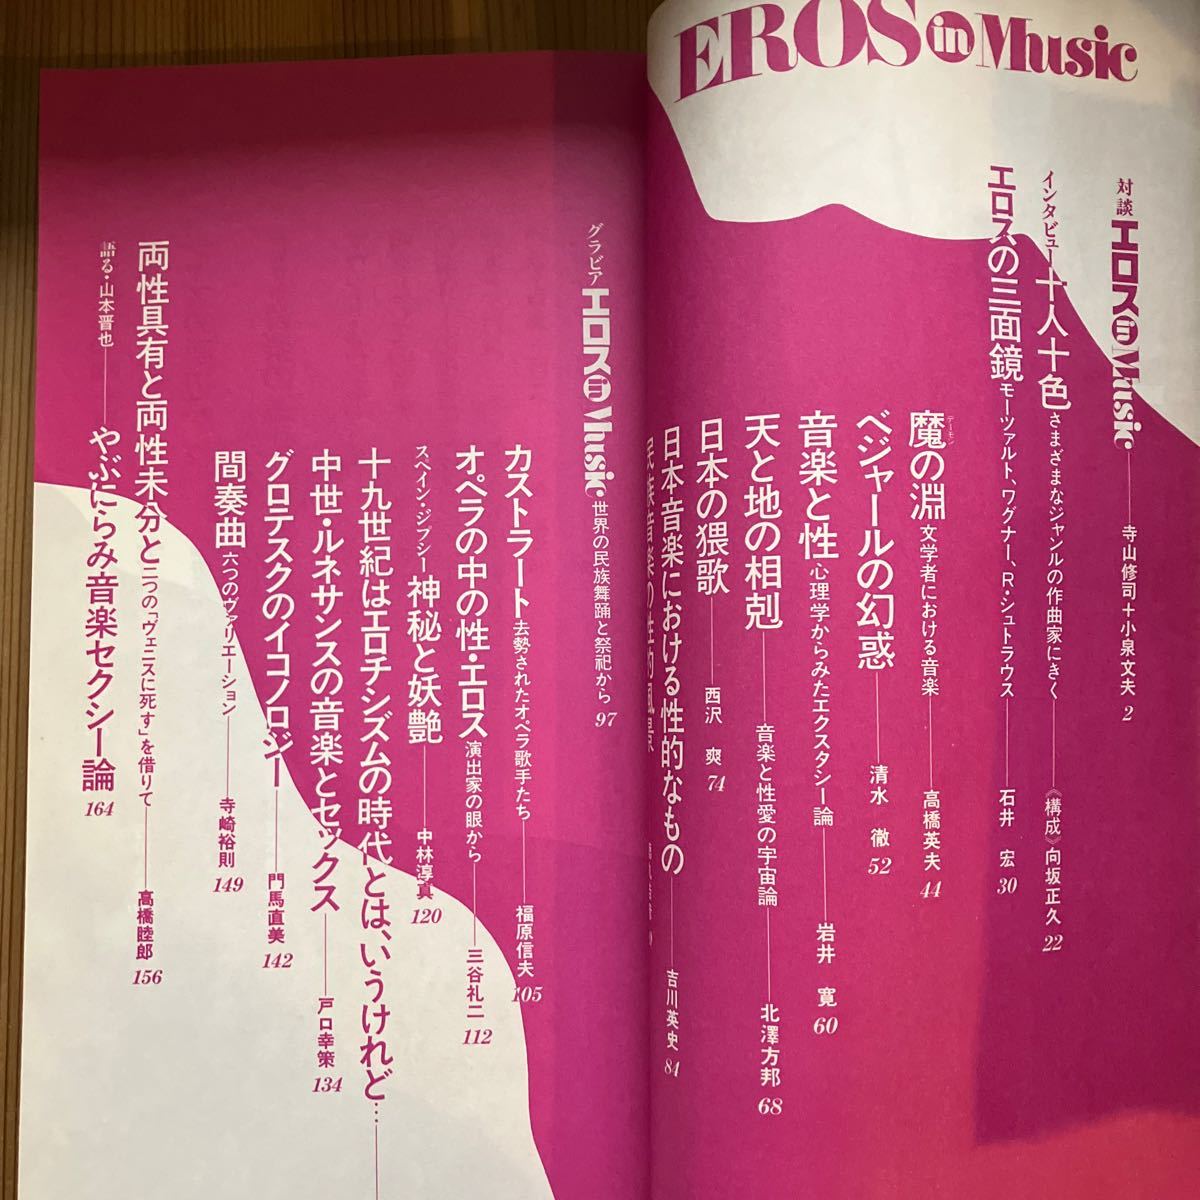  Suntory music . paper 3e Roth in Music 1983 year the first version 213 page Suntory music foundation secondhand book Terayama Shuuji Ikeda Masuo japanese .. Togawa Masako 